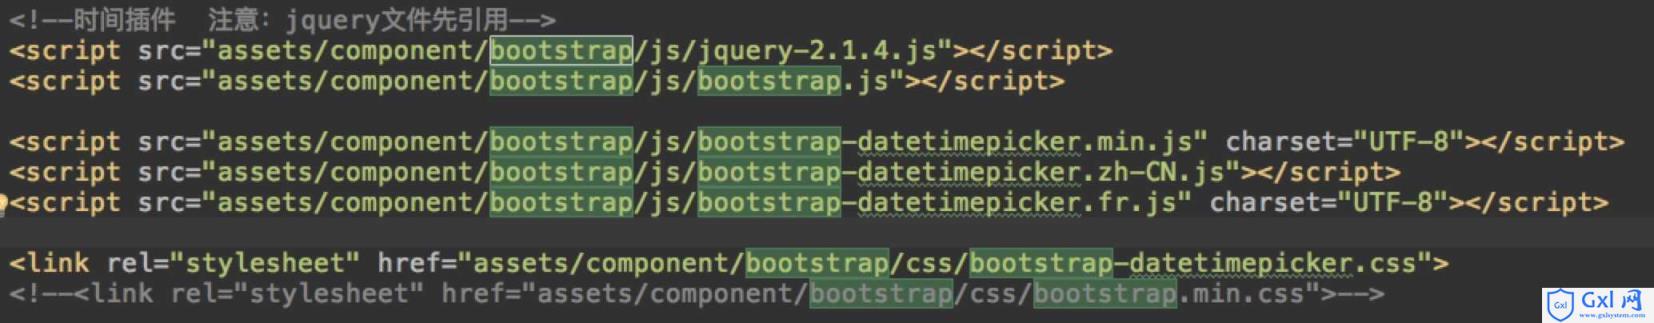 angular项目中bootstrap-datetimepicker时间插件的使用示例 - 文章图片